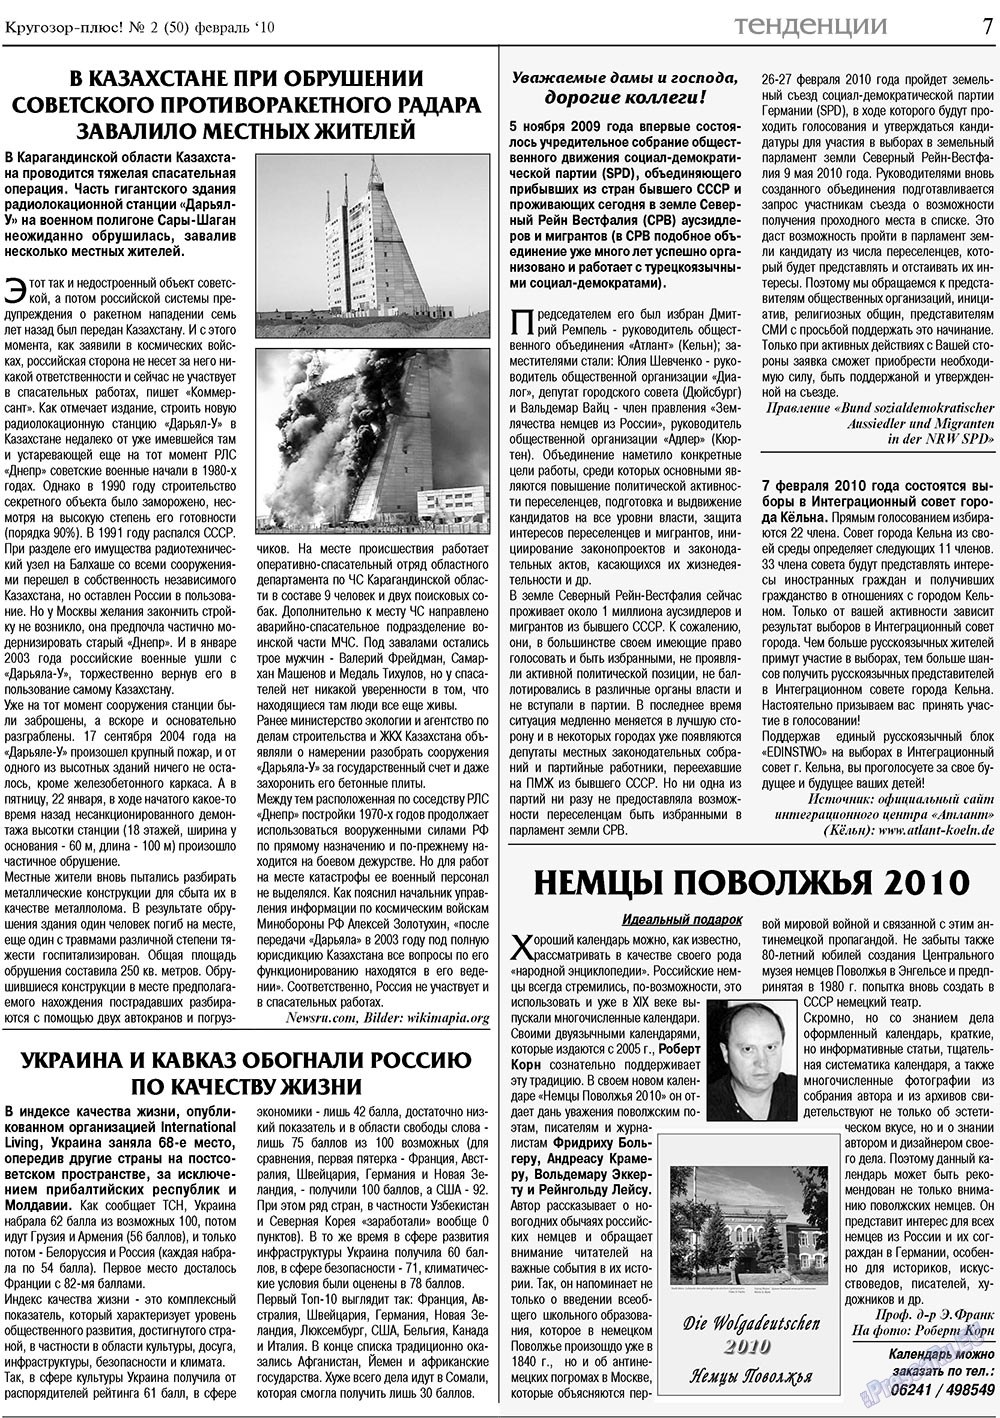 Кругозор плюс! (газета). 2010 год, номер 2, стр. 7